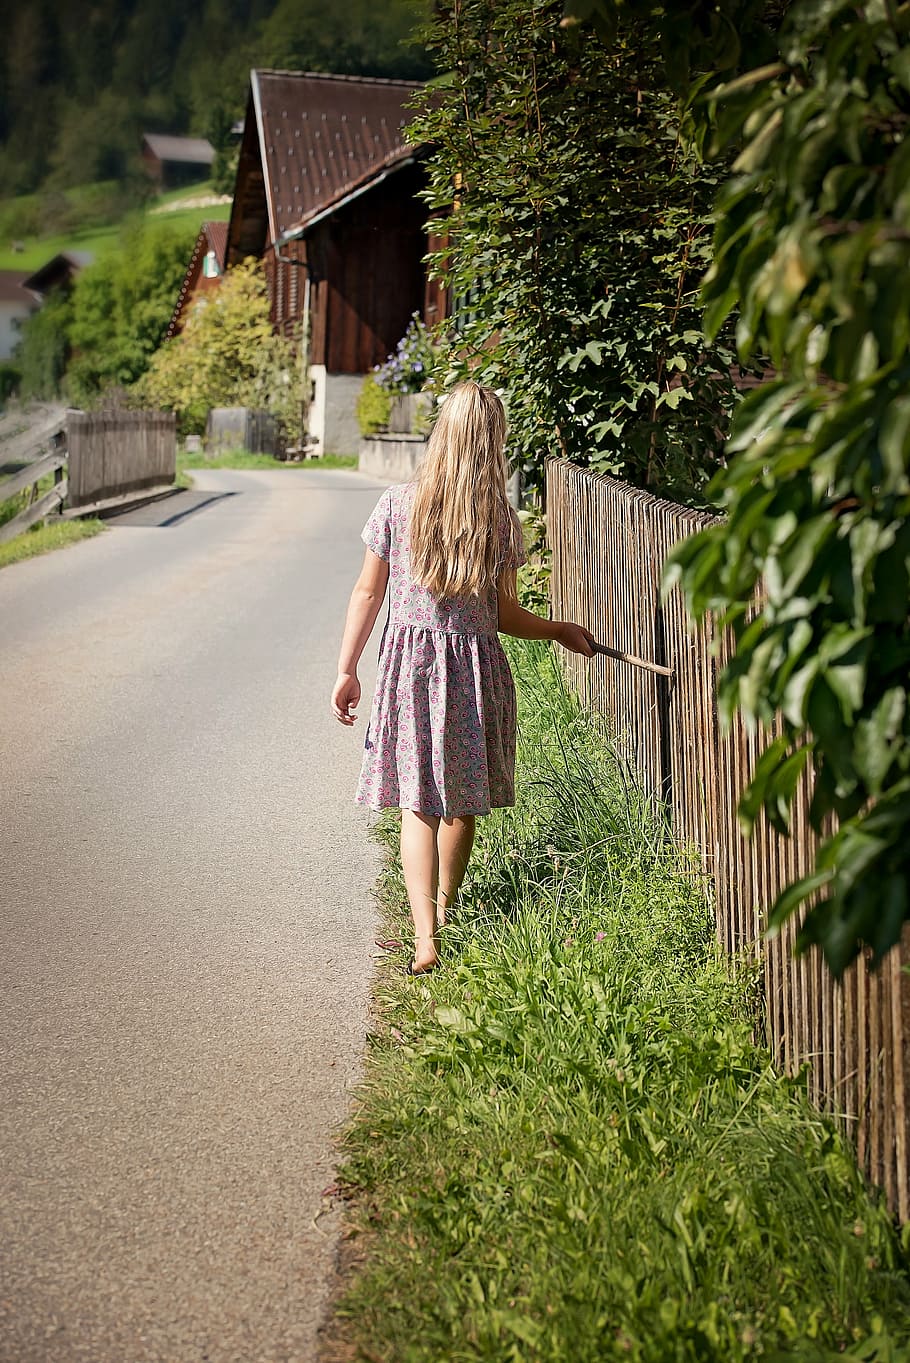 girl, dress, standing, dress grass, pathway, person, human, child, long hair, road